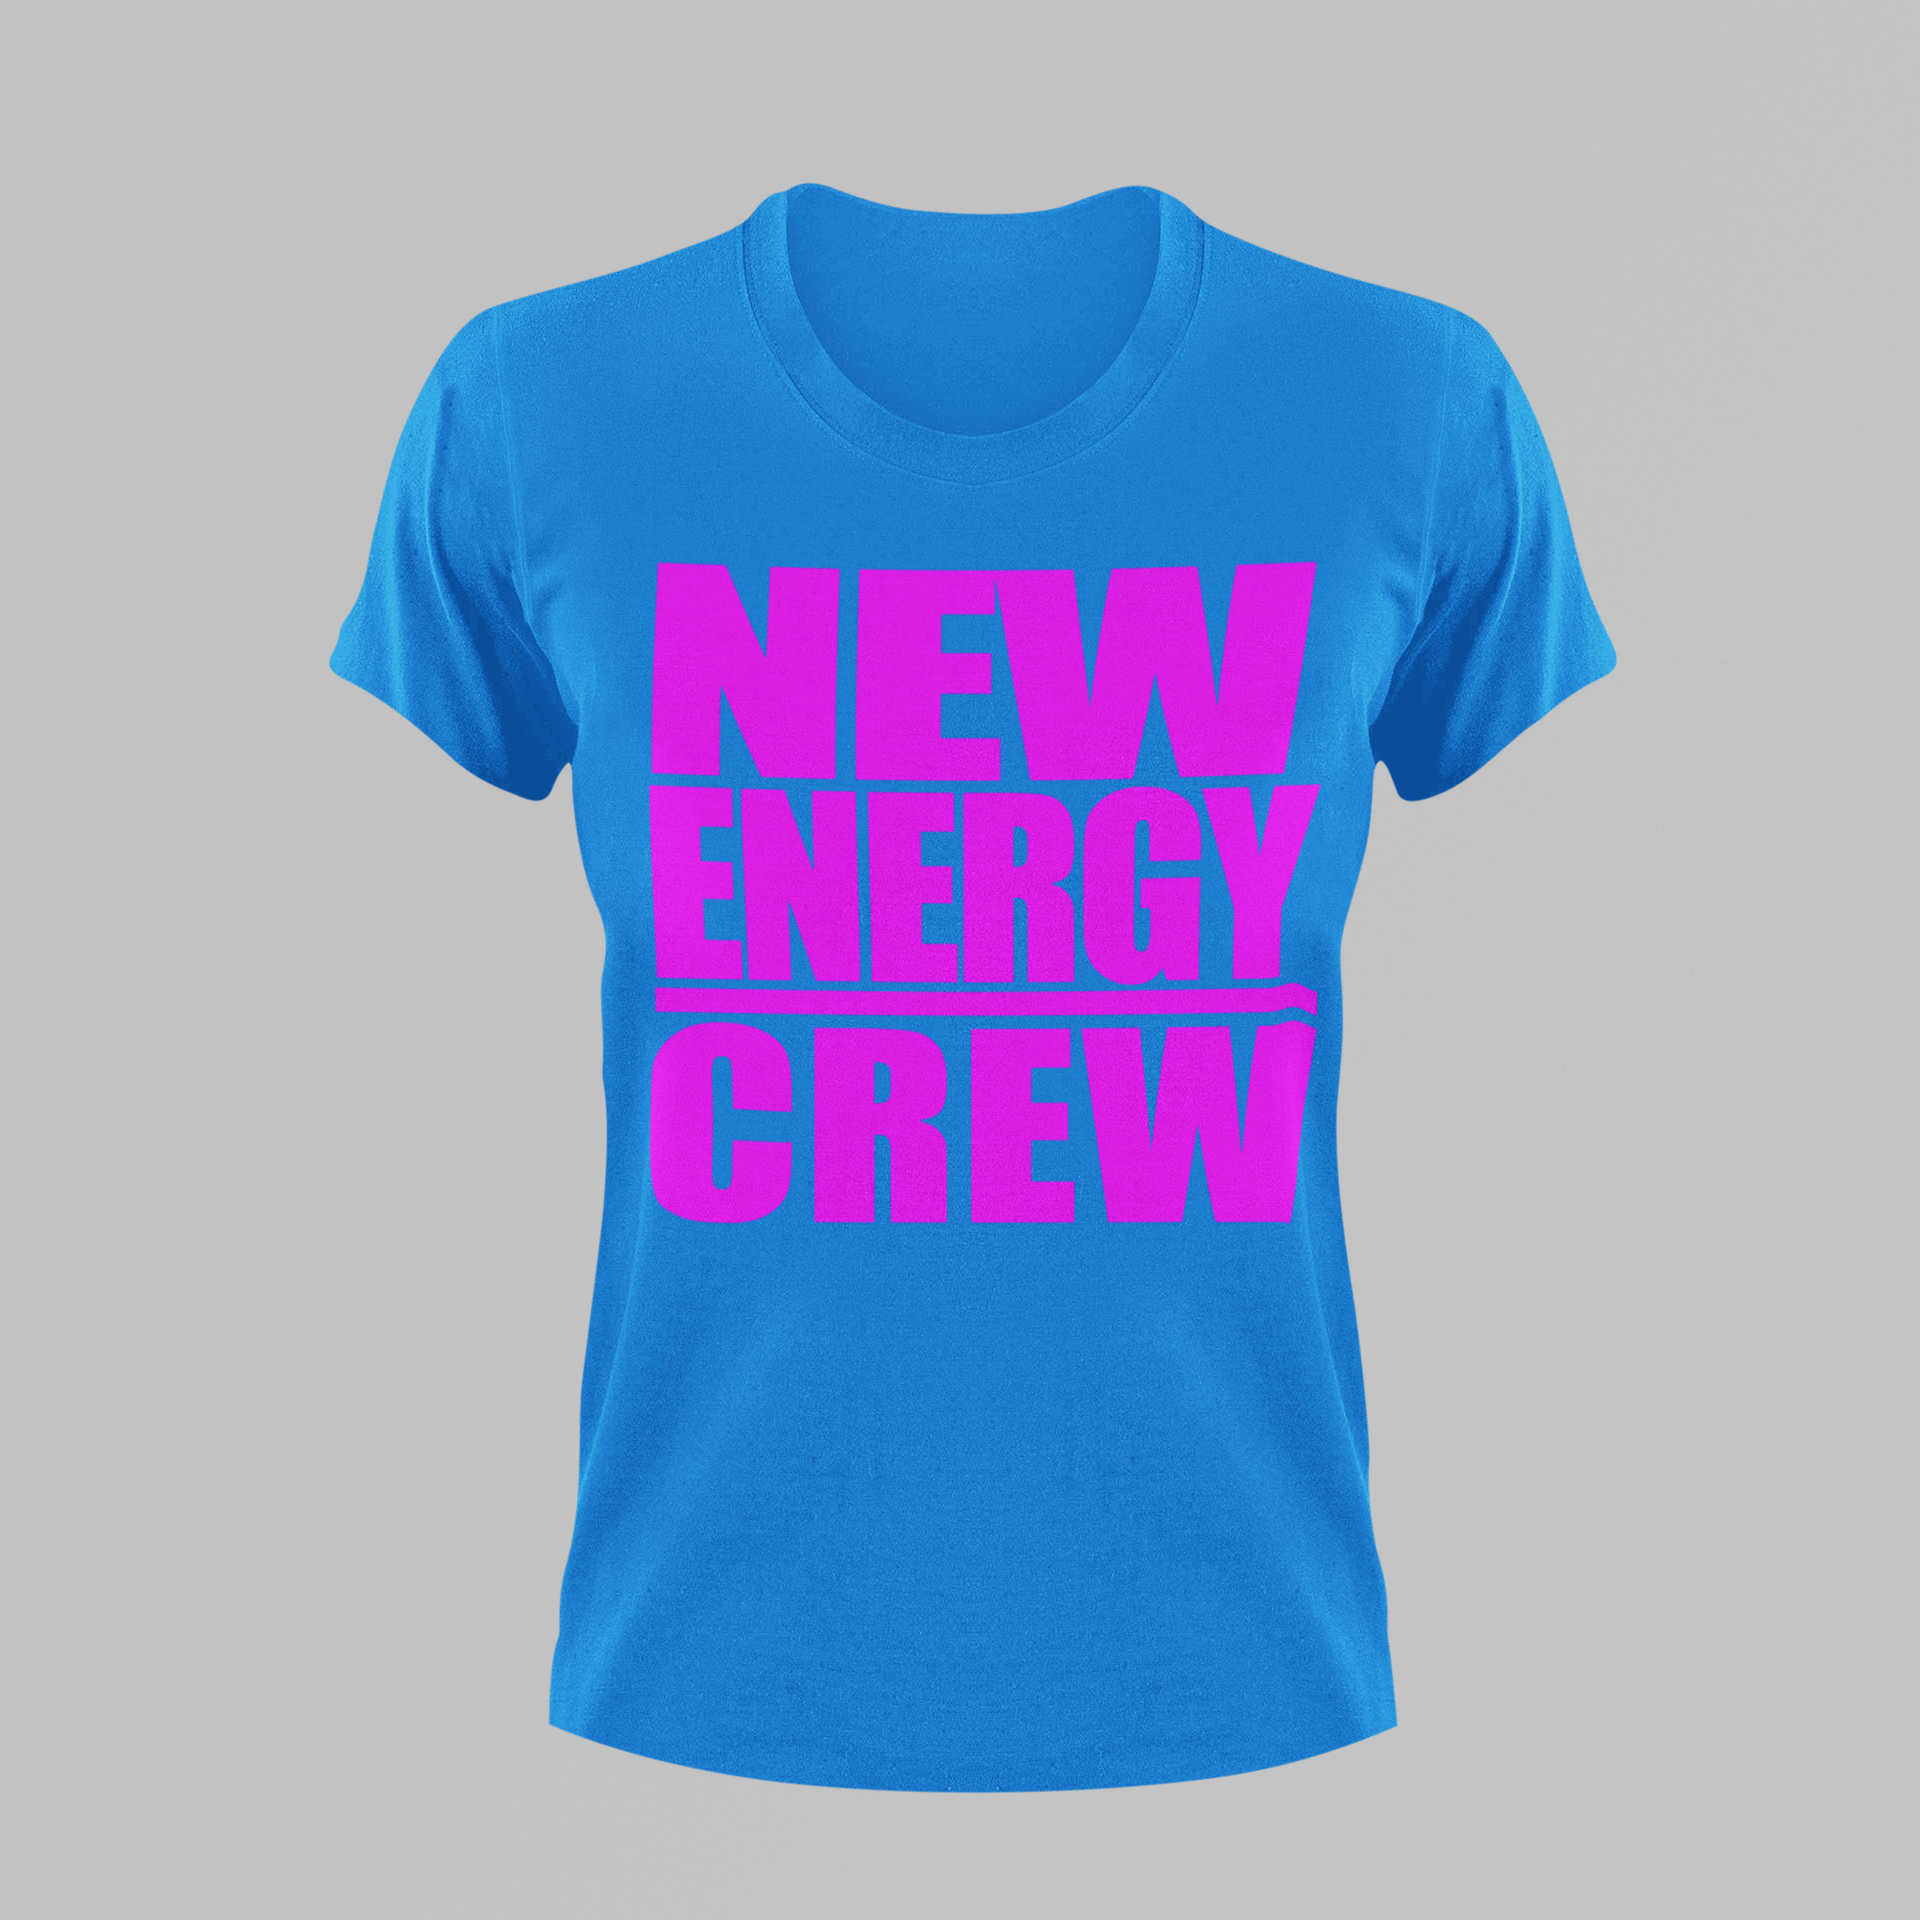 Official New Energy Crew Logo Tee. (N.E.C)